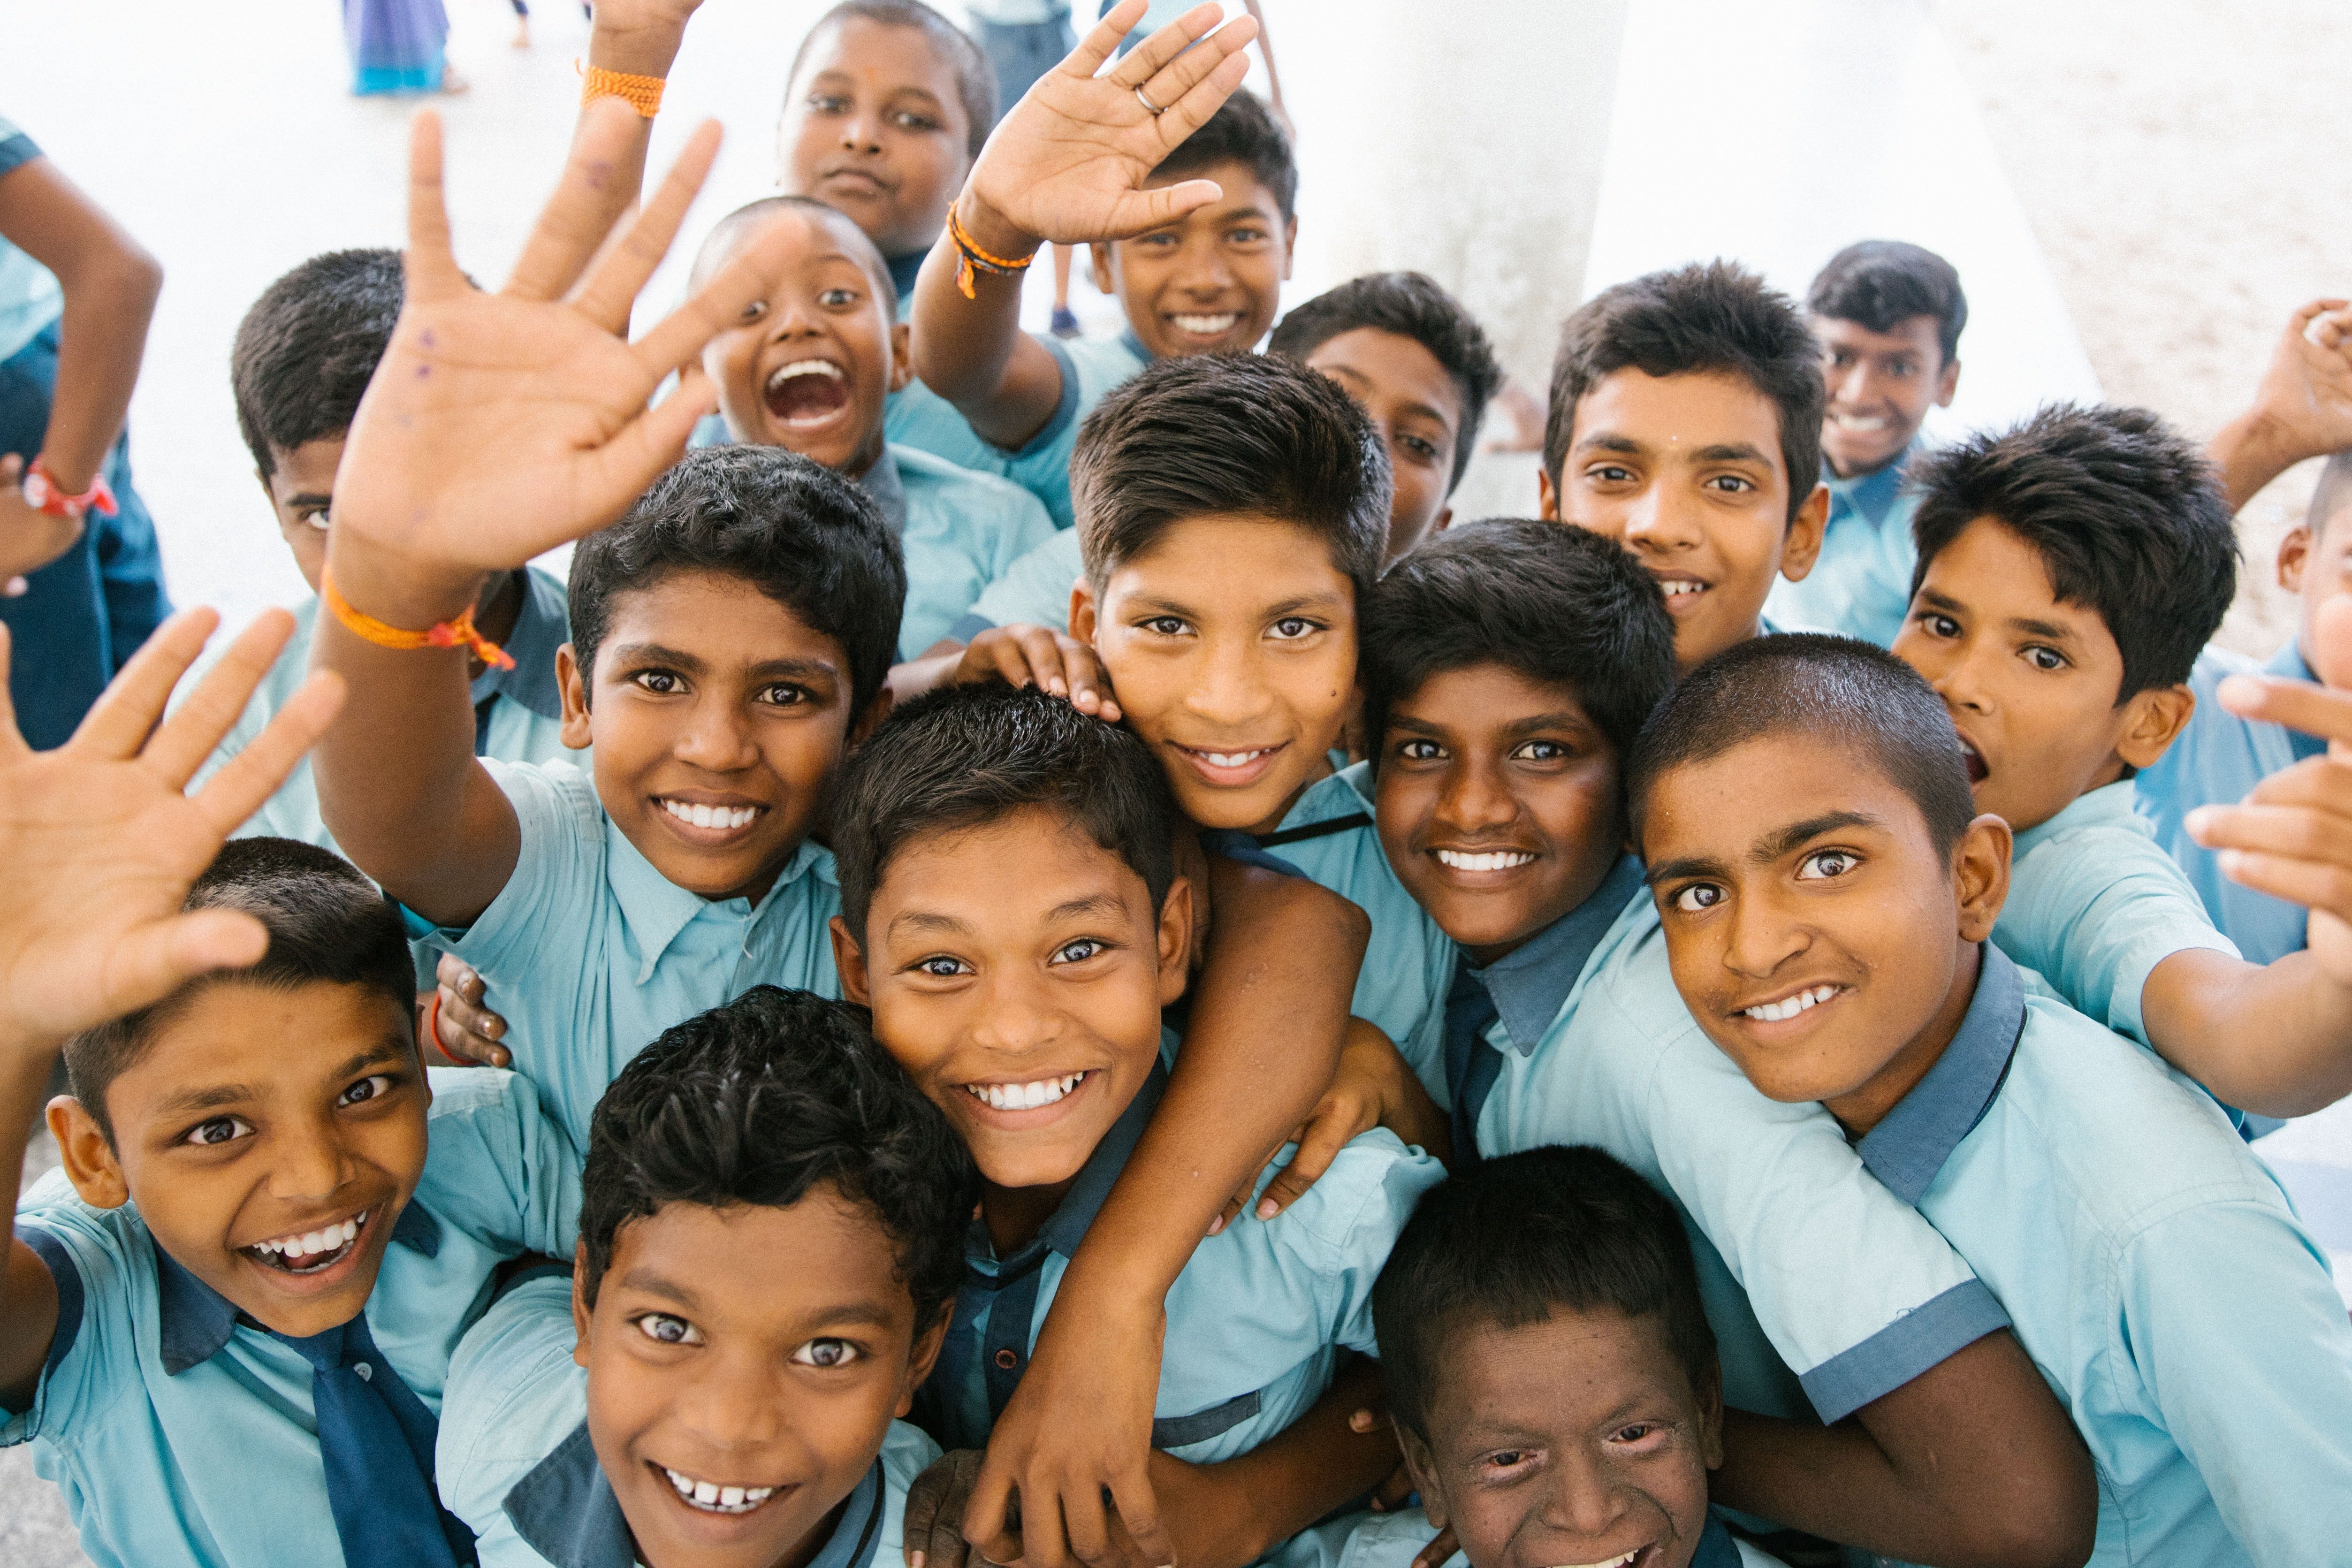 Group of smiling children | Source: Unsplash